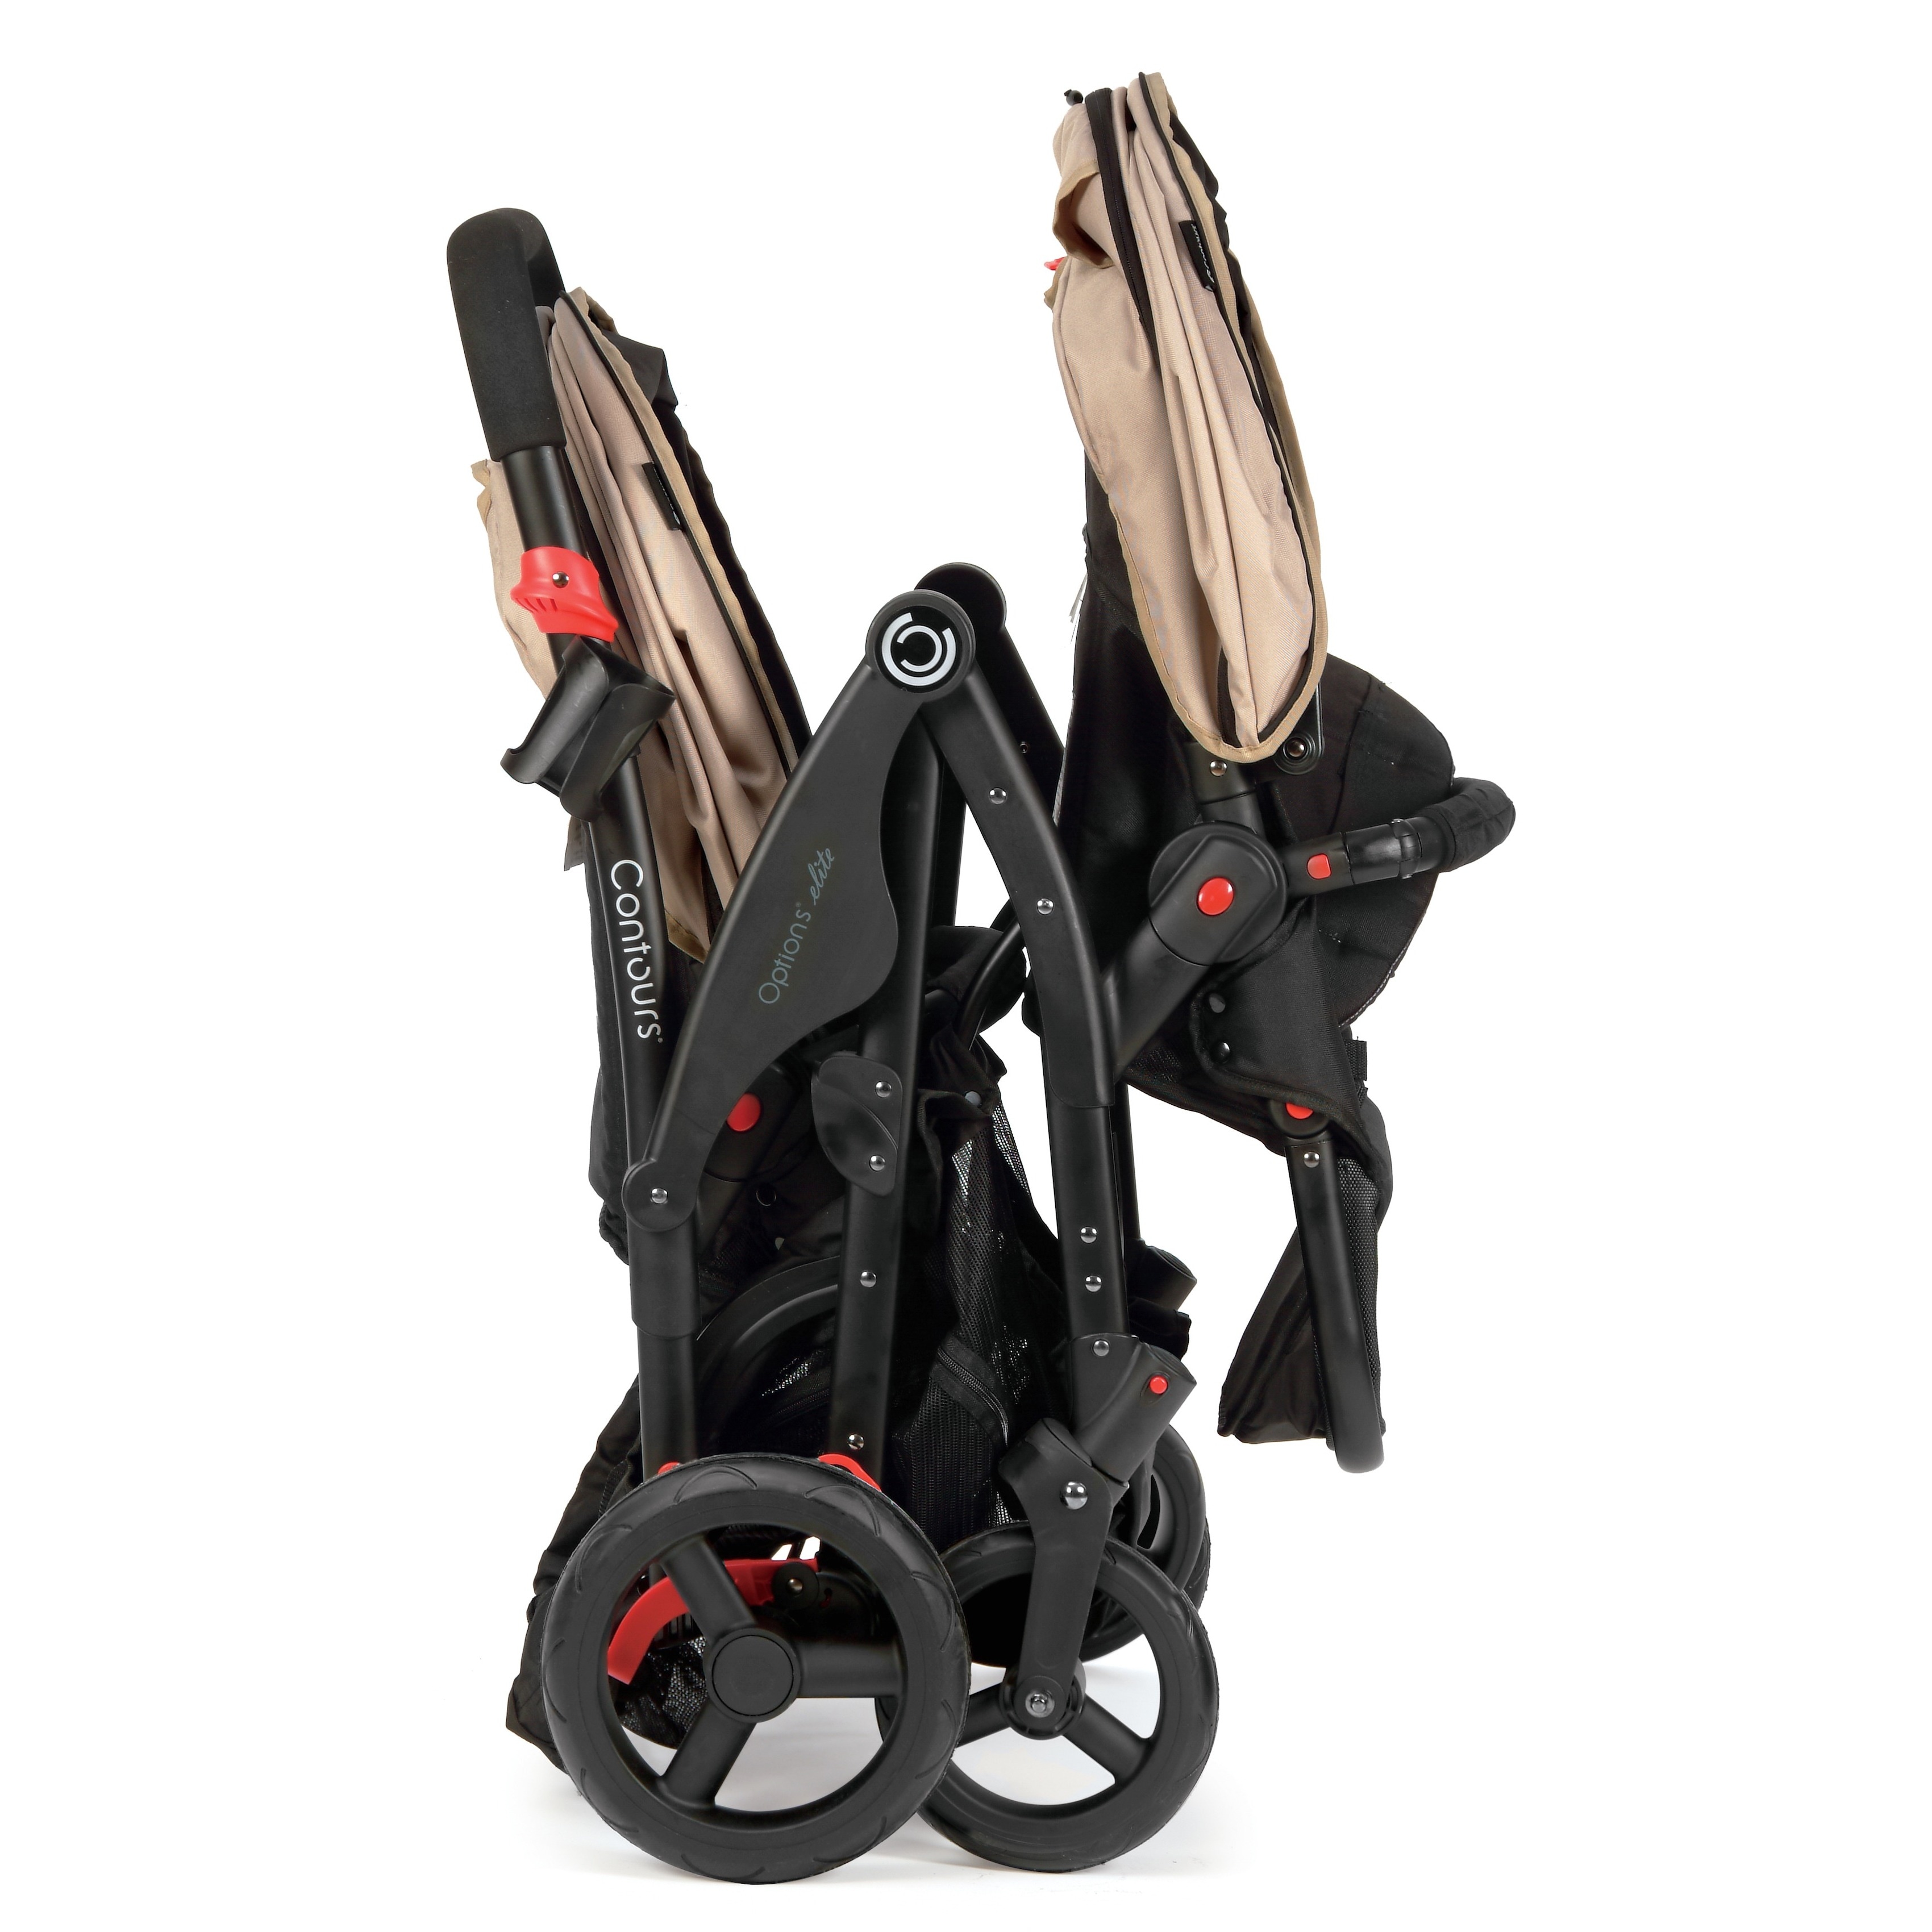 options elite double stroller